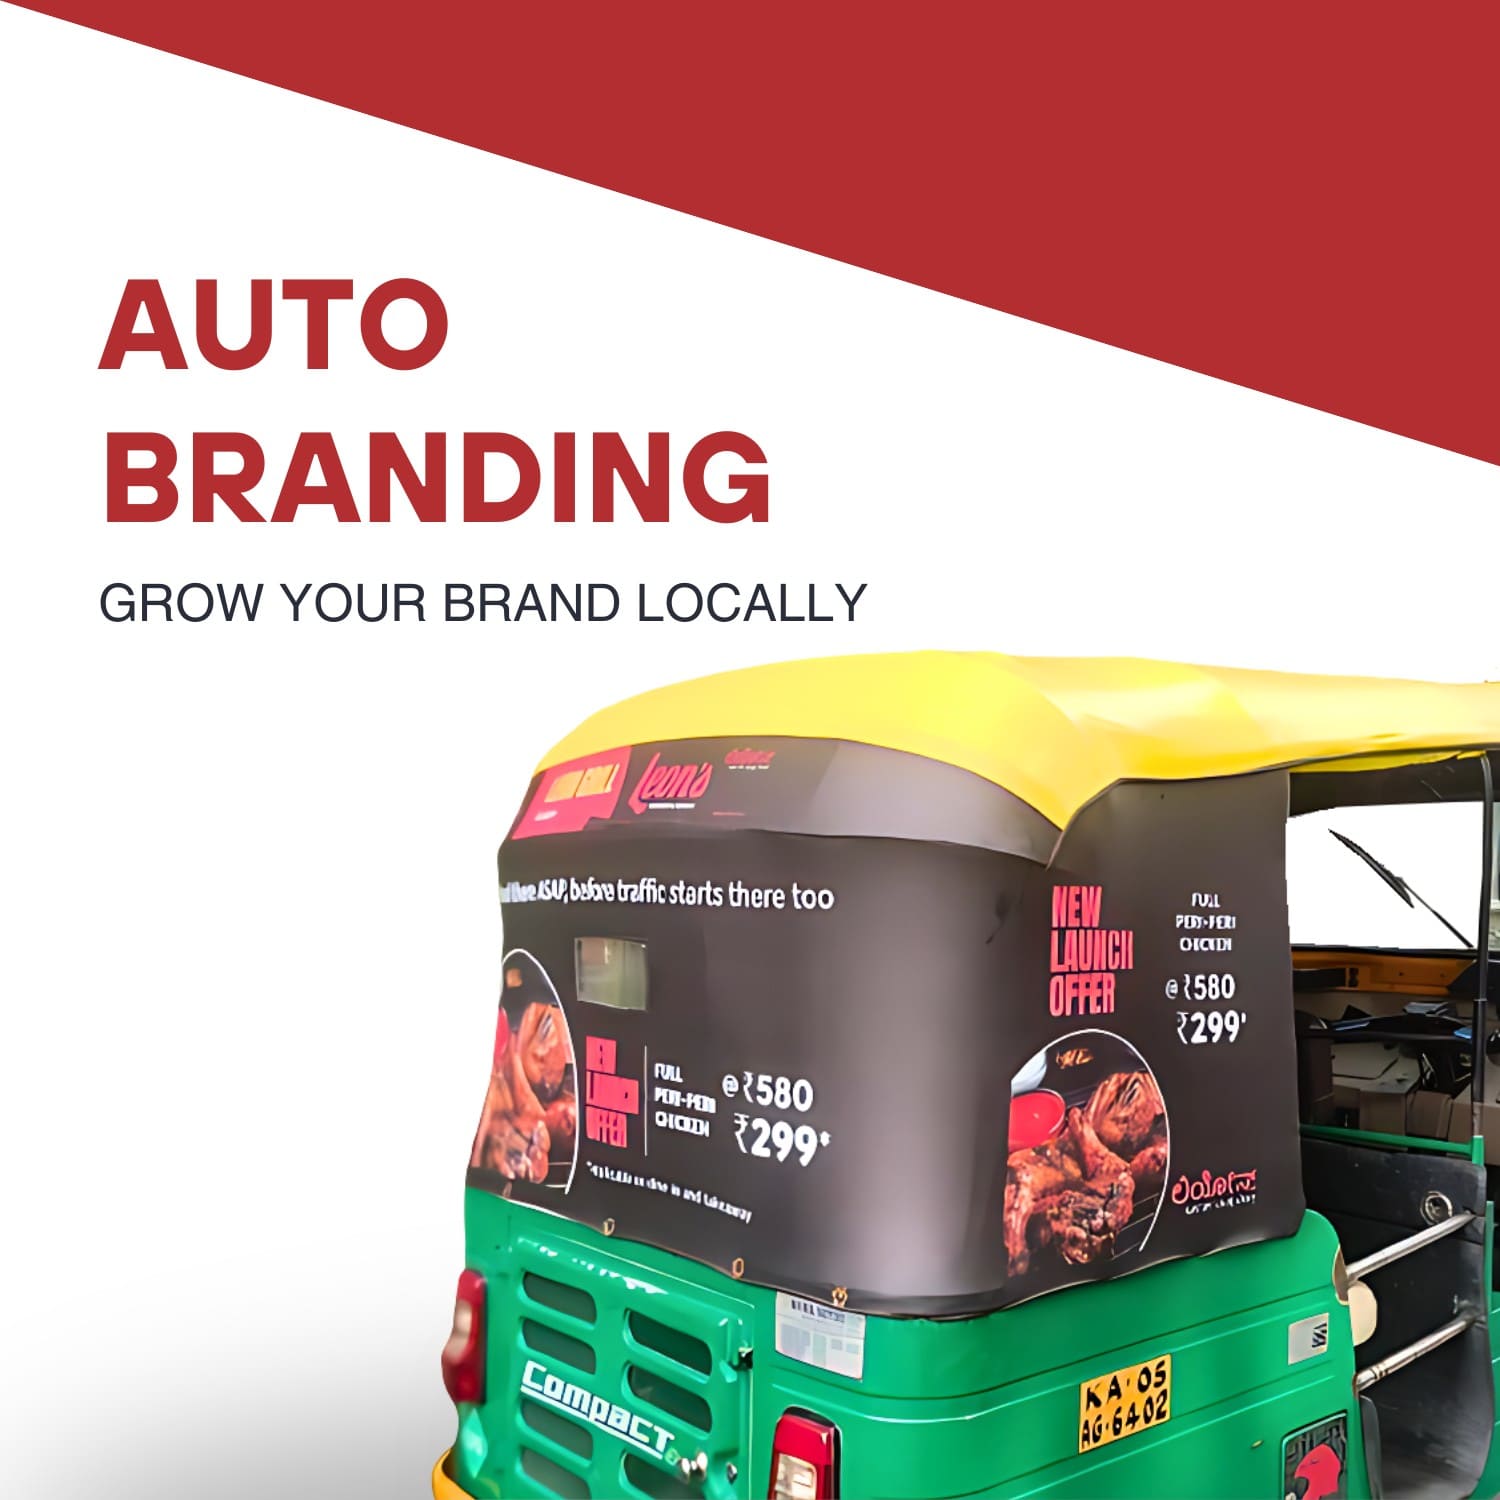 Auto Branding | Auto Rikshaw Advertising Services In India